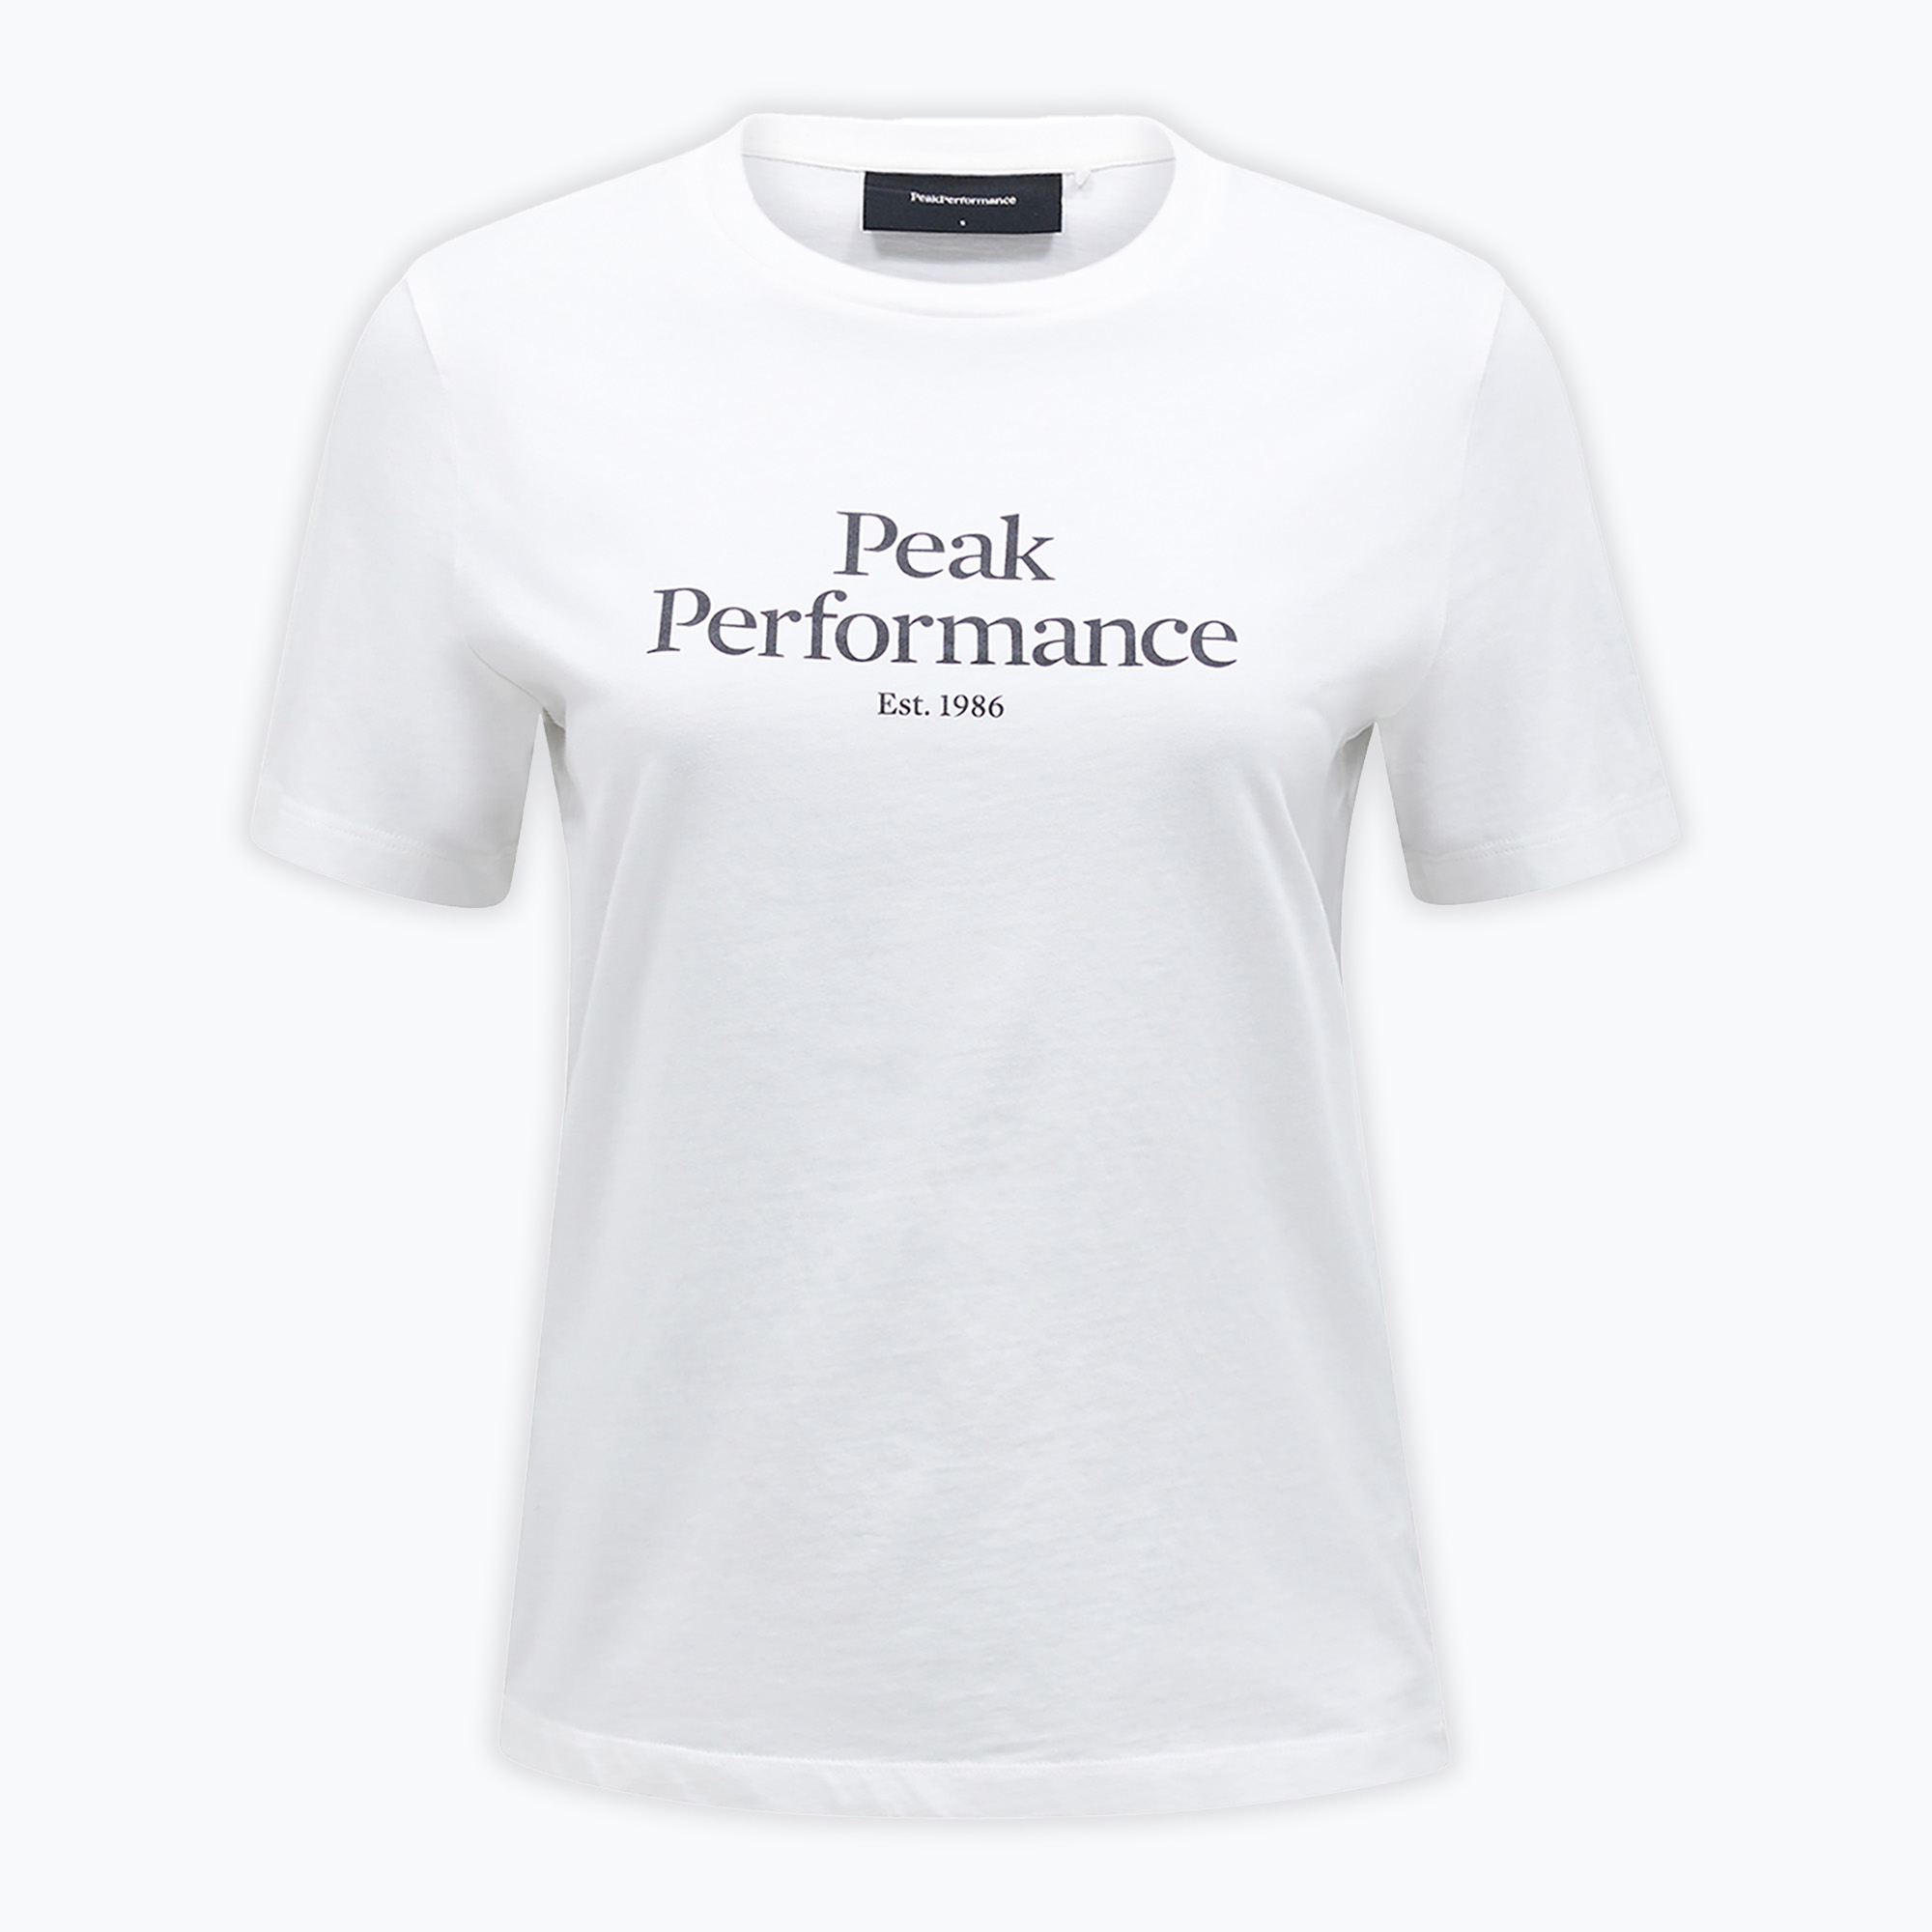 Дамска тениска Peak Performance Original Tee off white